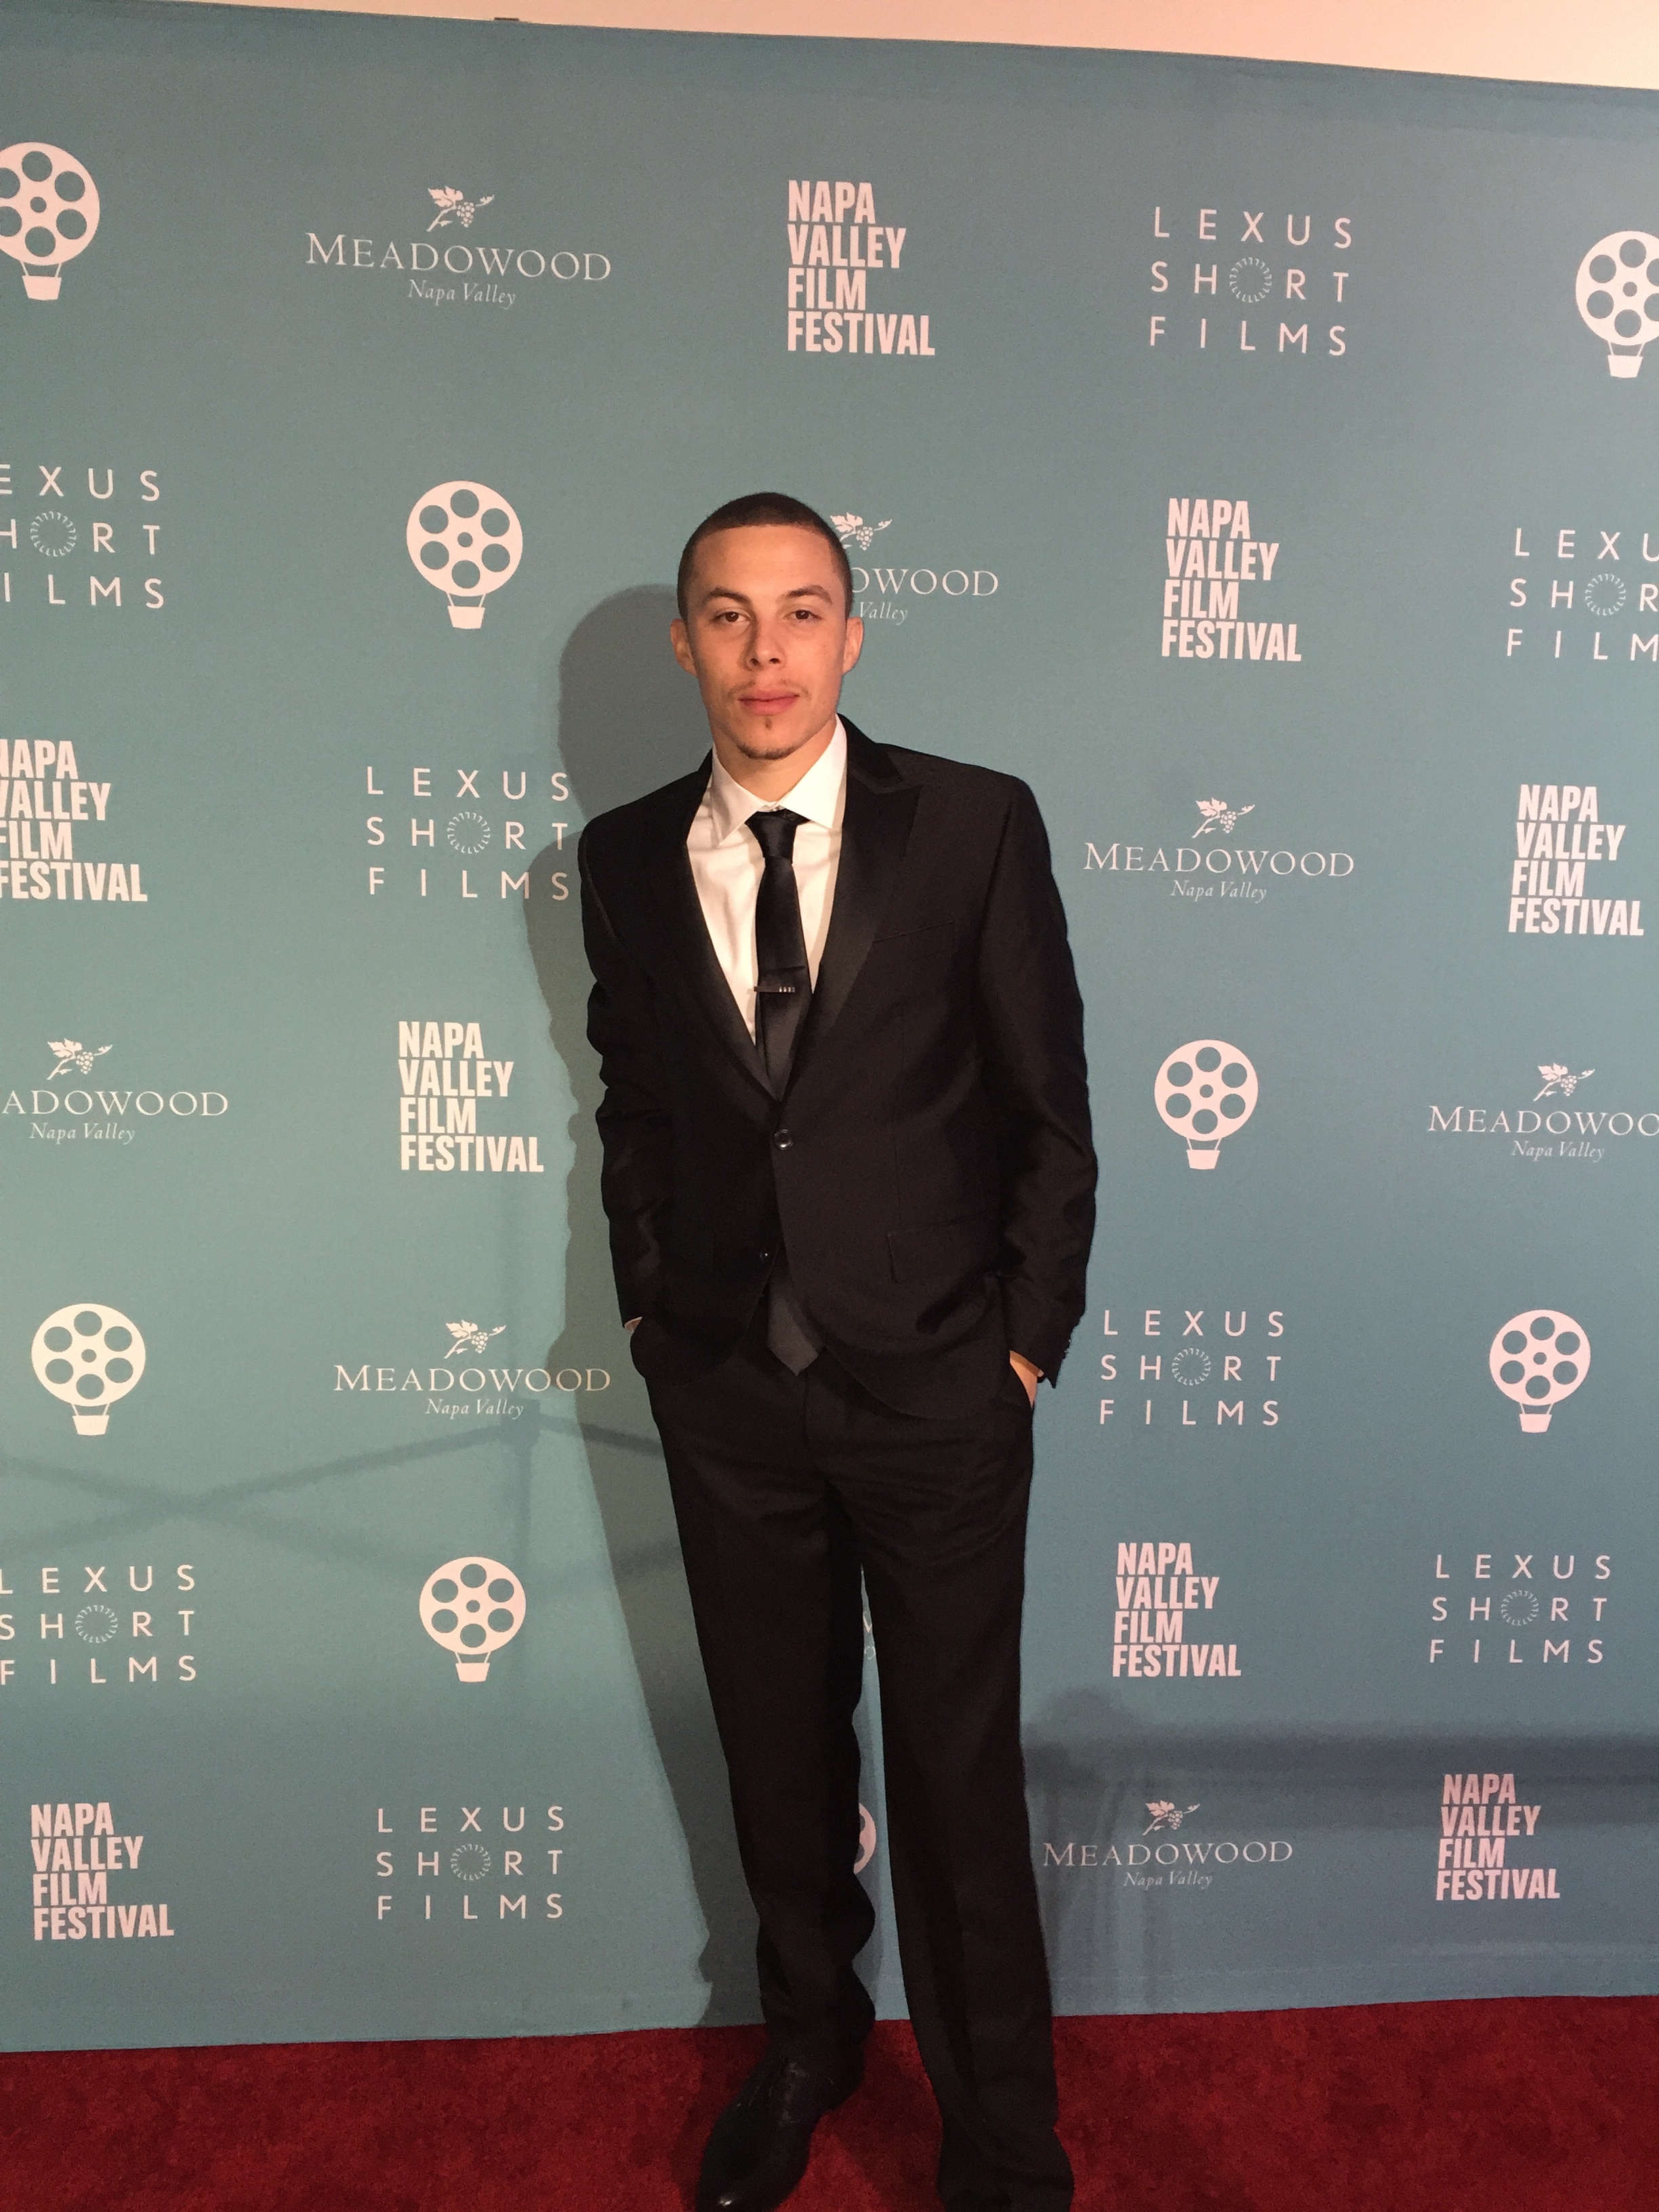 John Orantes attending the Napa Valley Film Festival (2015)